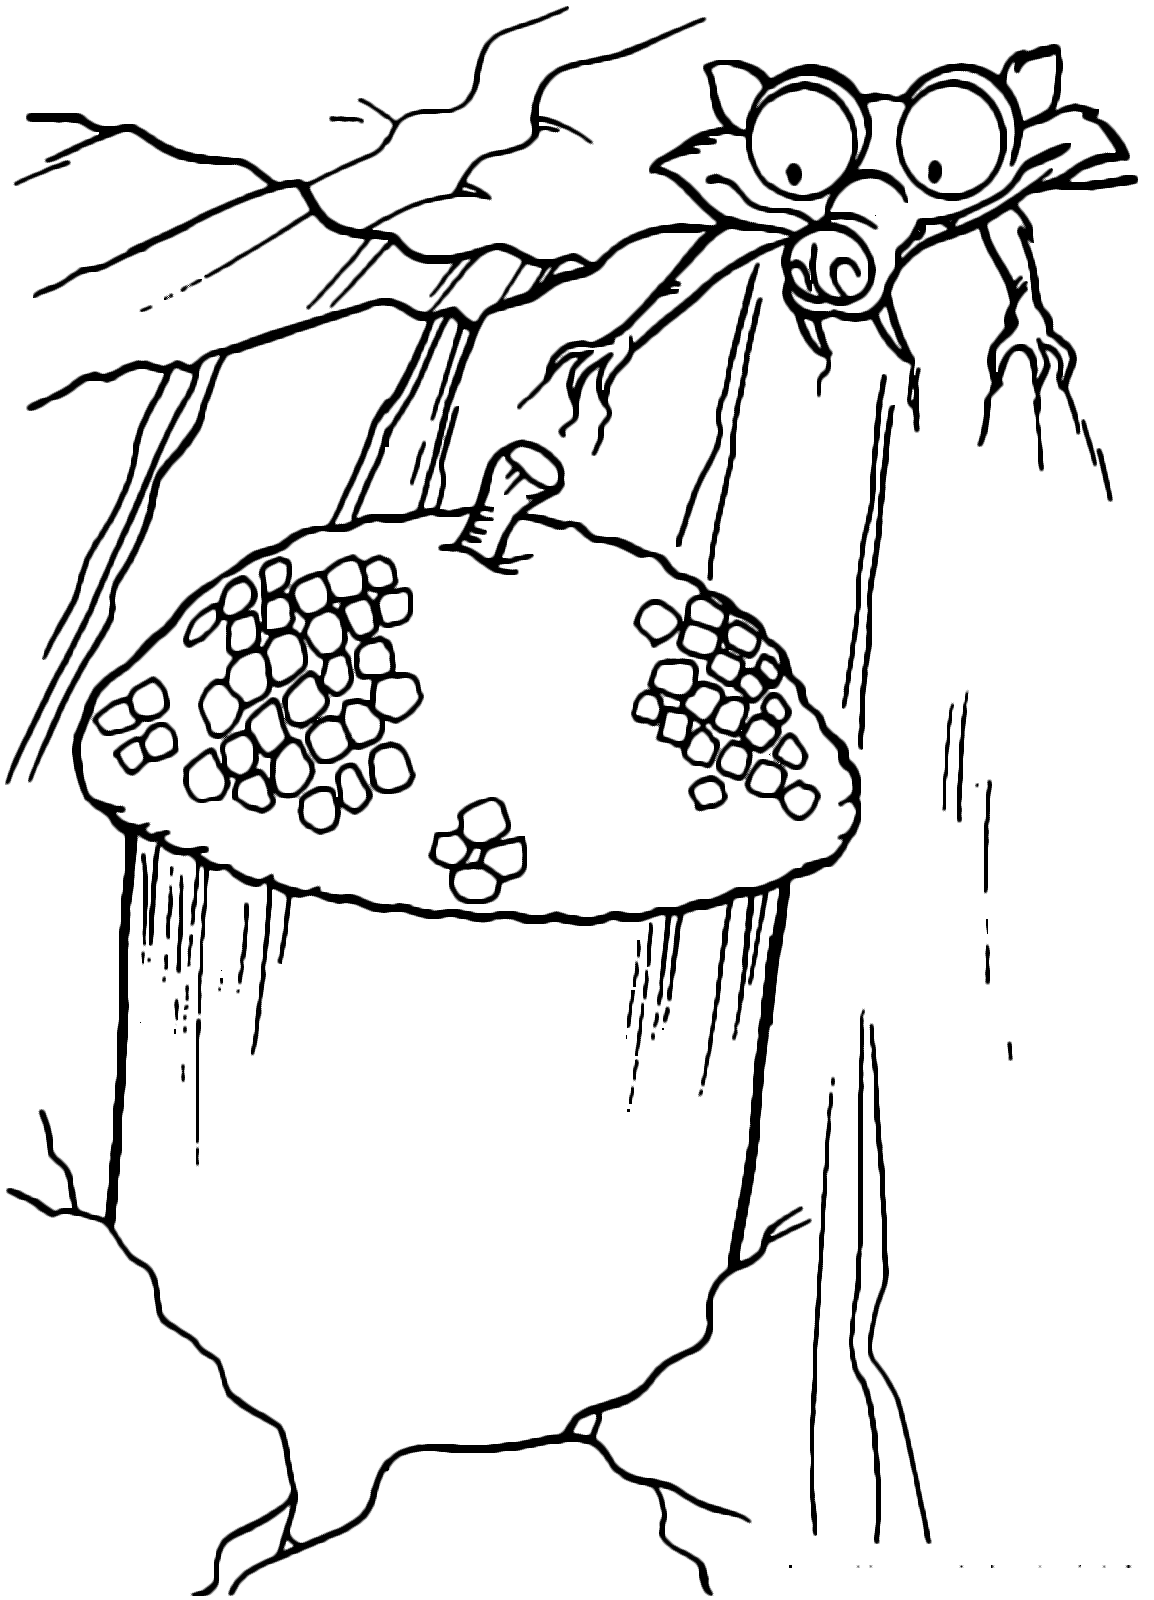 Ice Age - Scrat found his acorn in a rock